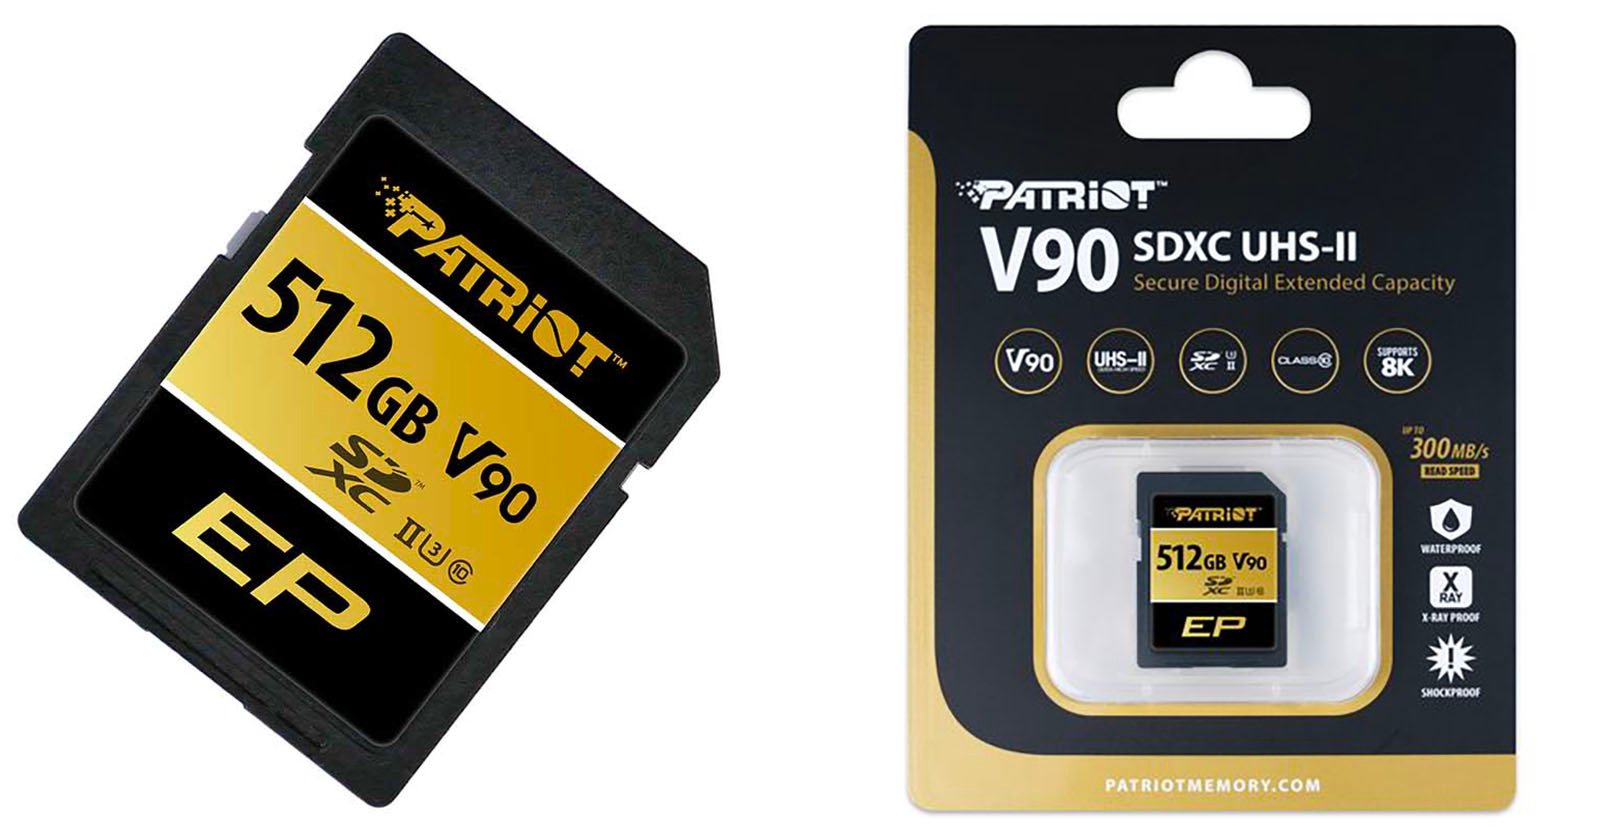 256GB SanDisk UHS-II SD Card